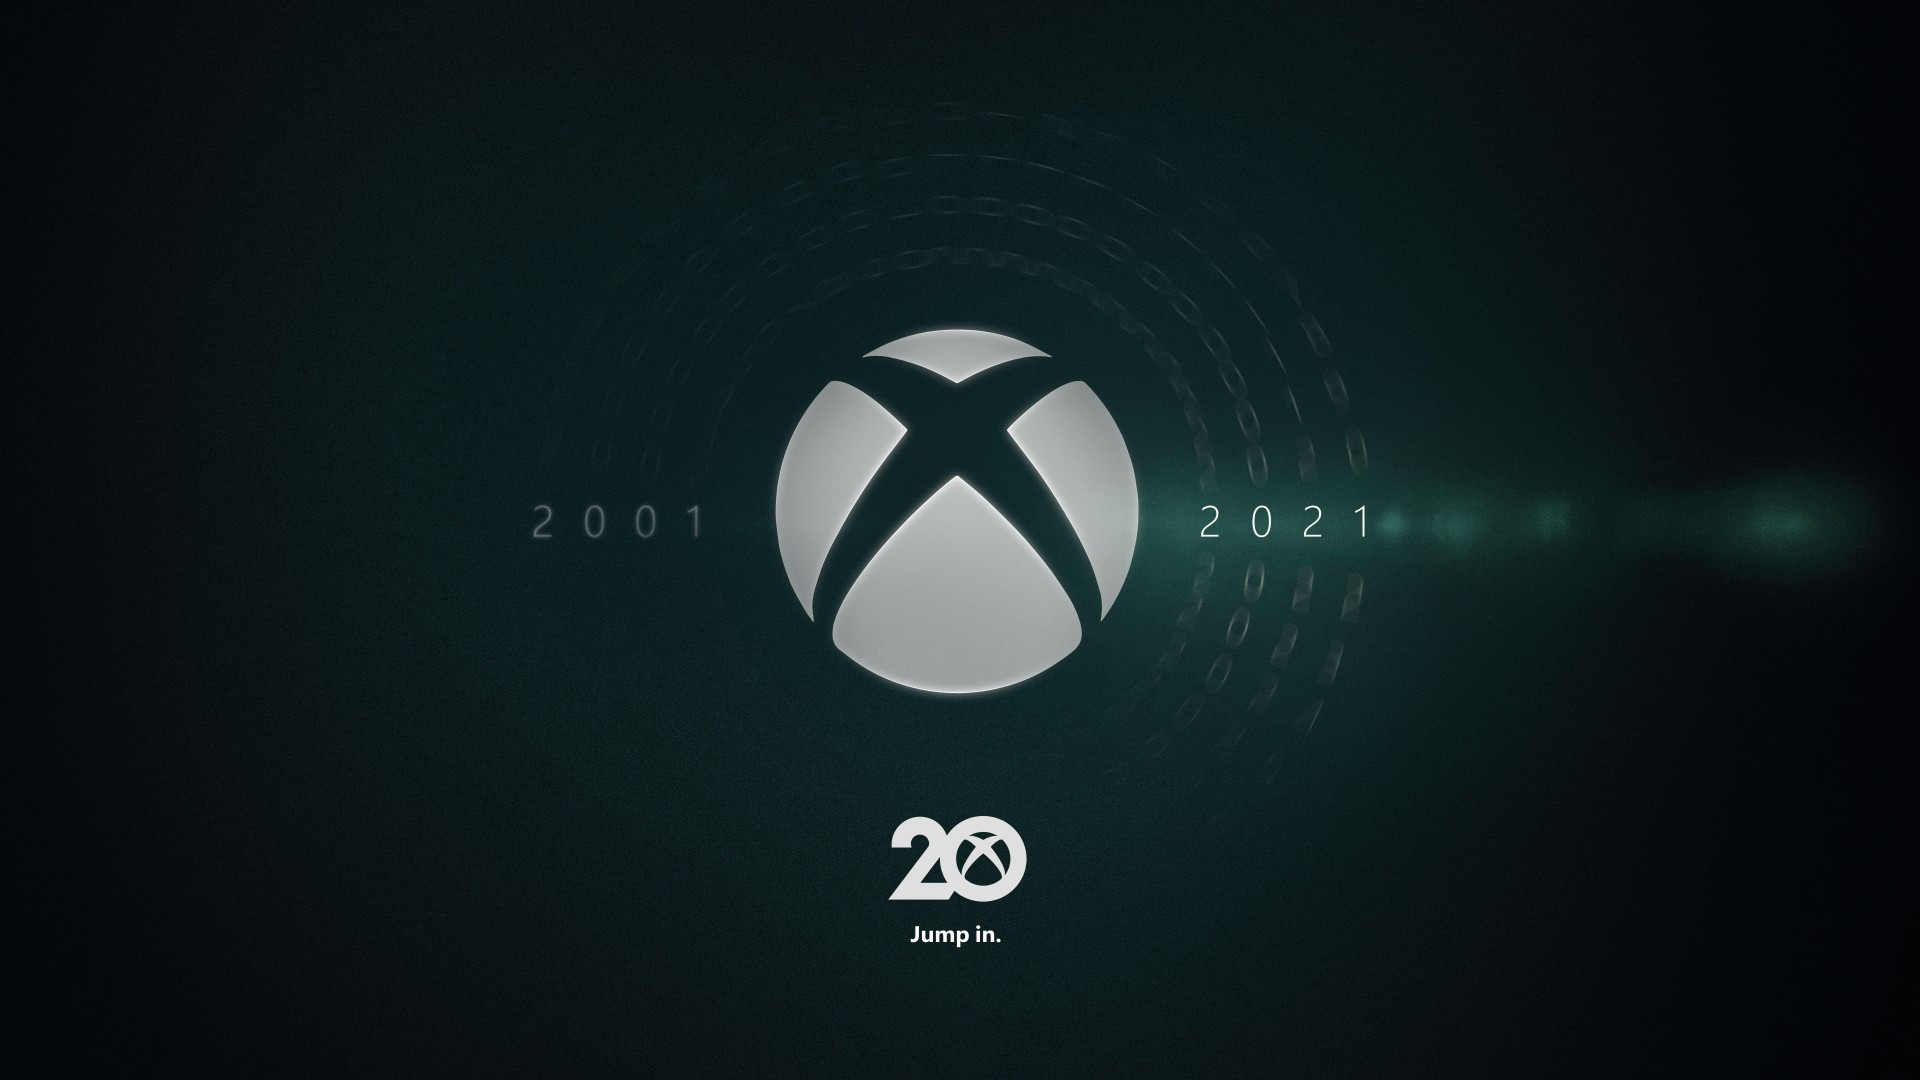 Celebrate 20 years of Xbox